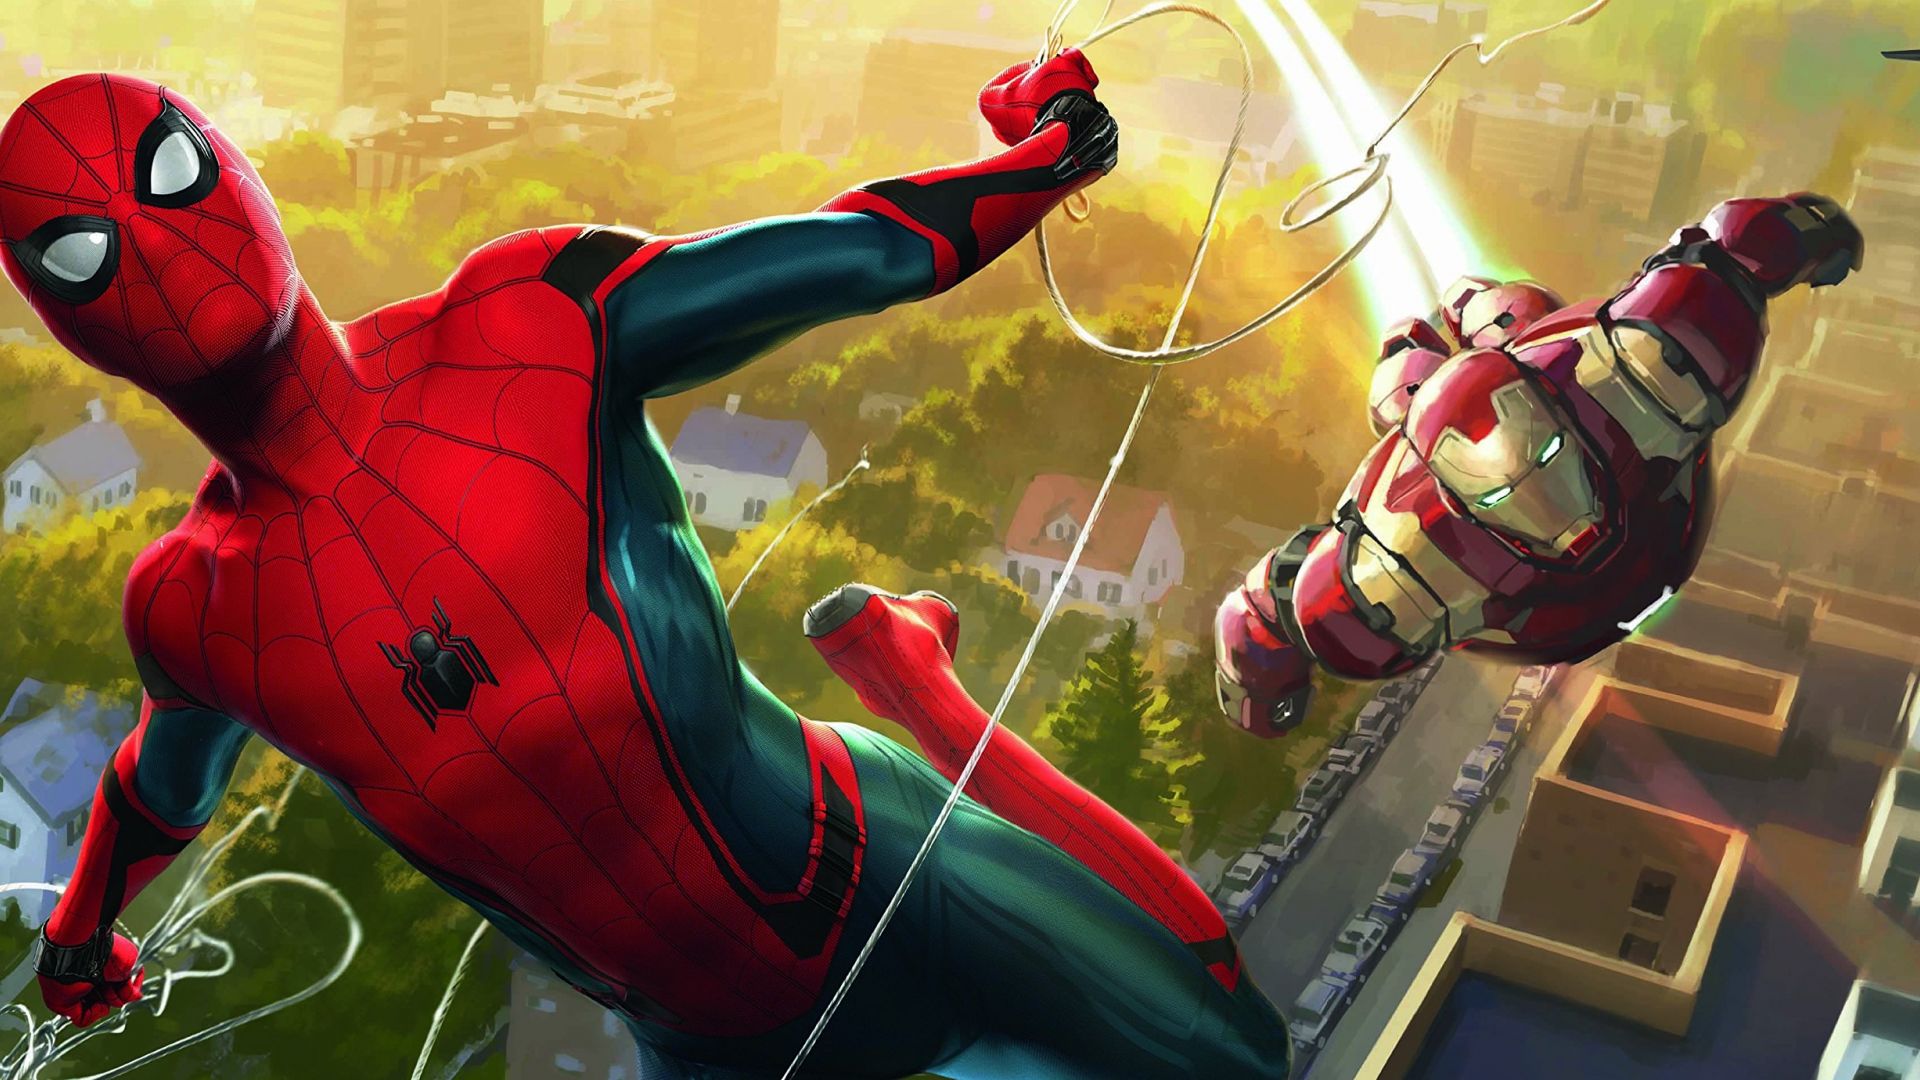 Wallpaper Spider man and Iron man, marvel comics, artwork